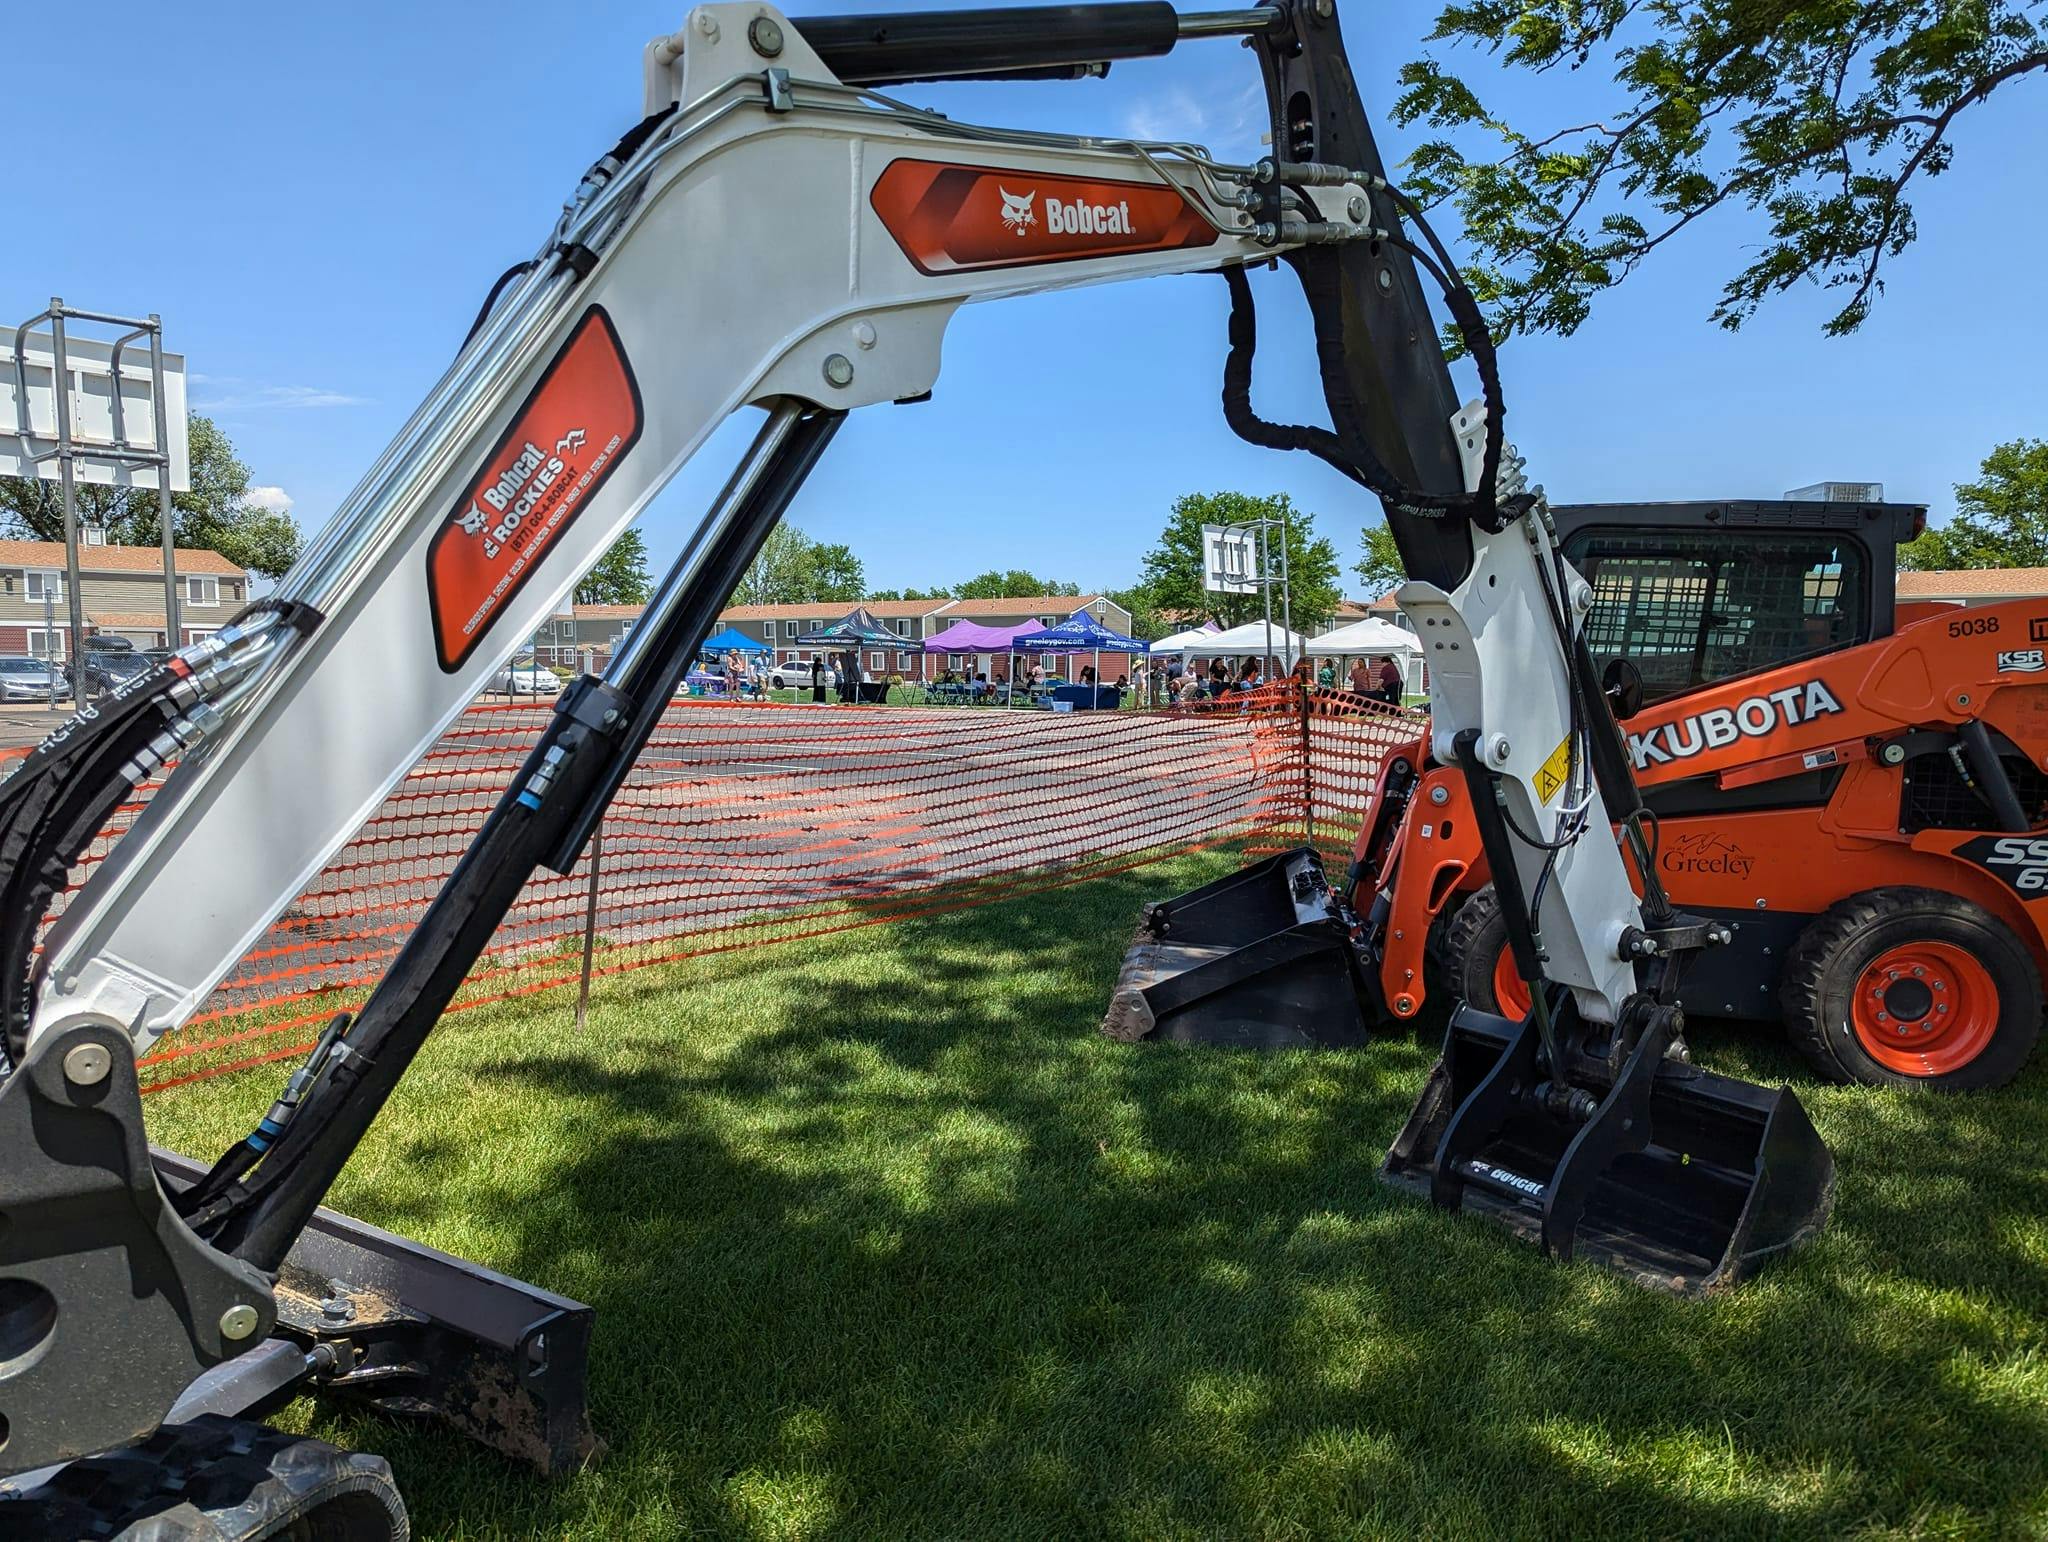 June 26 Groundbreaking: Construction Equipment Ready to Start at Delta Park